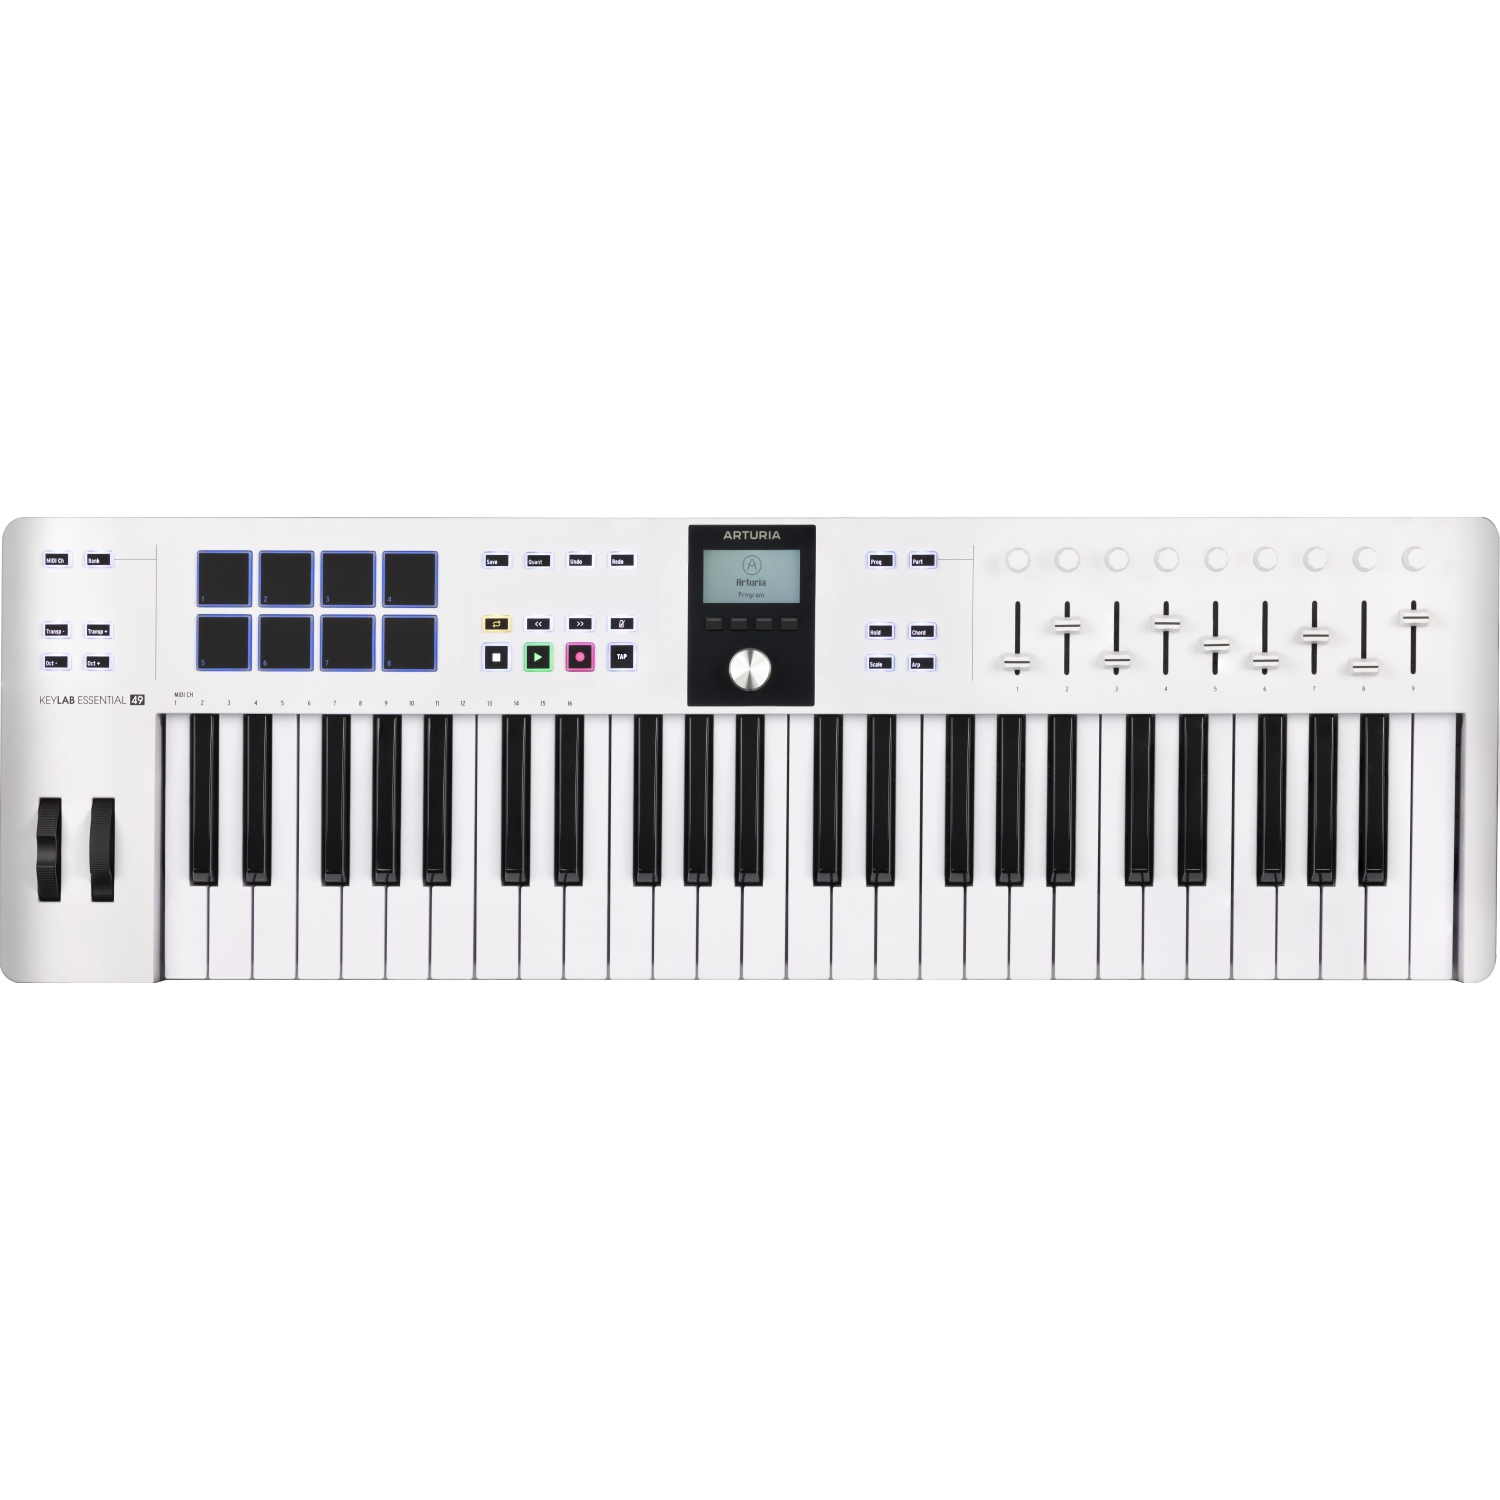 Arturia Keylab Essential 49 MK3 Universal MIDI Controller - White 